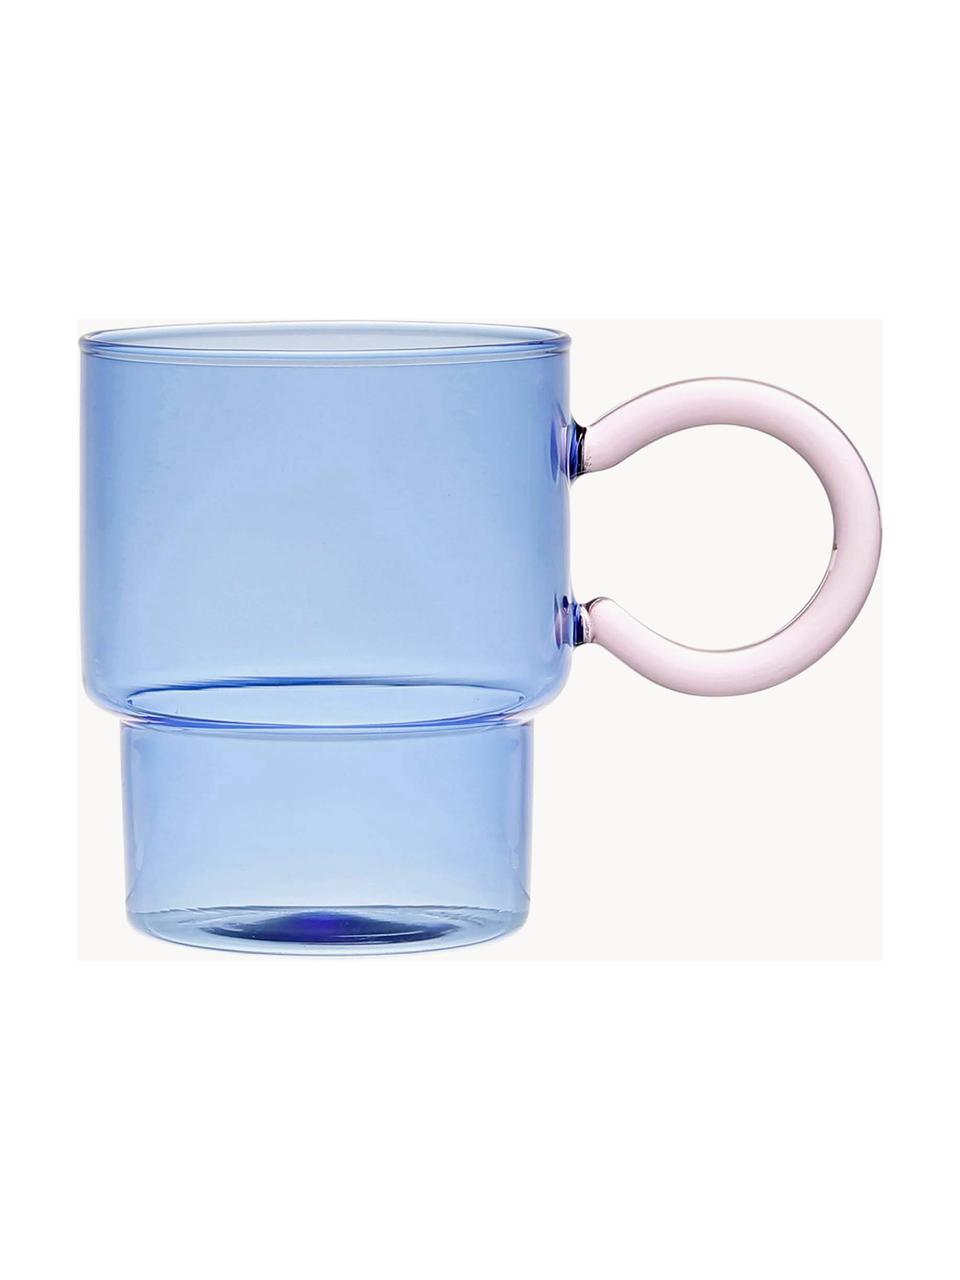 Set de tazas de vidrio The Belle, 2 uds., Vidrio, Azul, rosa pálido, Ø 13 x Al 10 cm, 330 ml